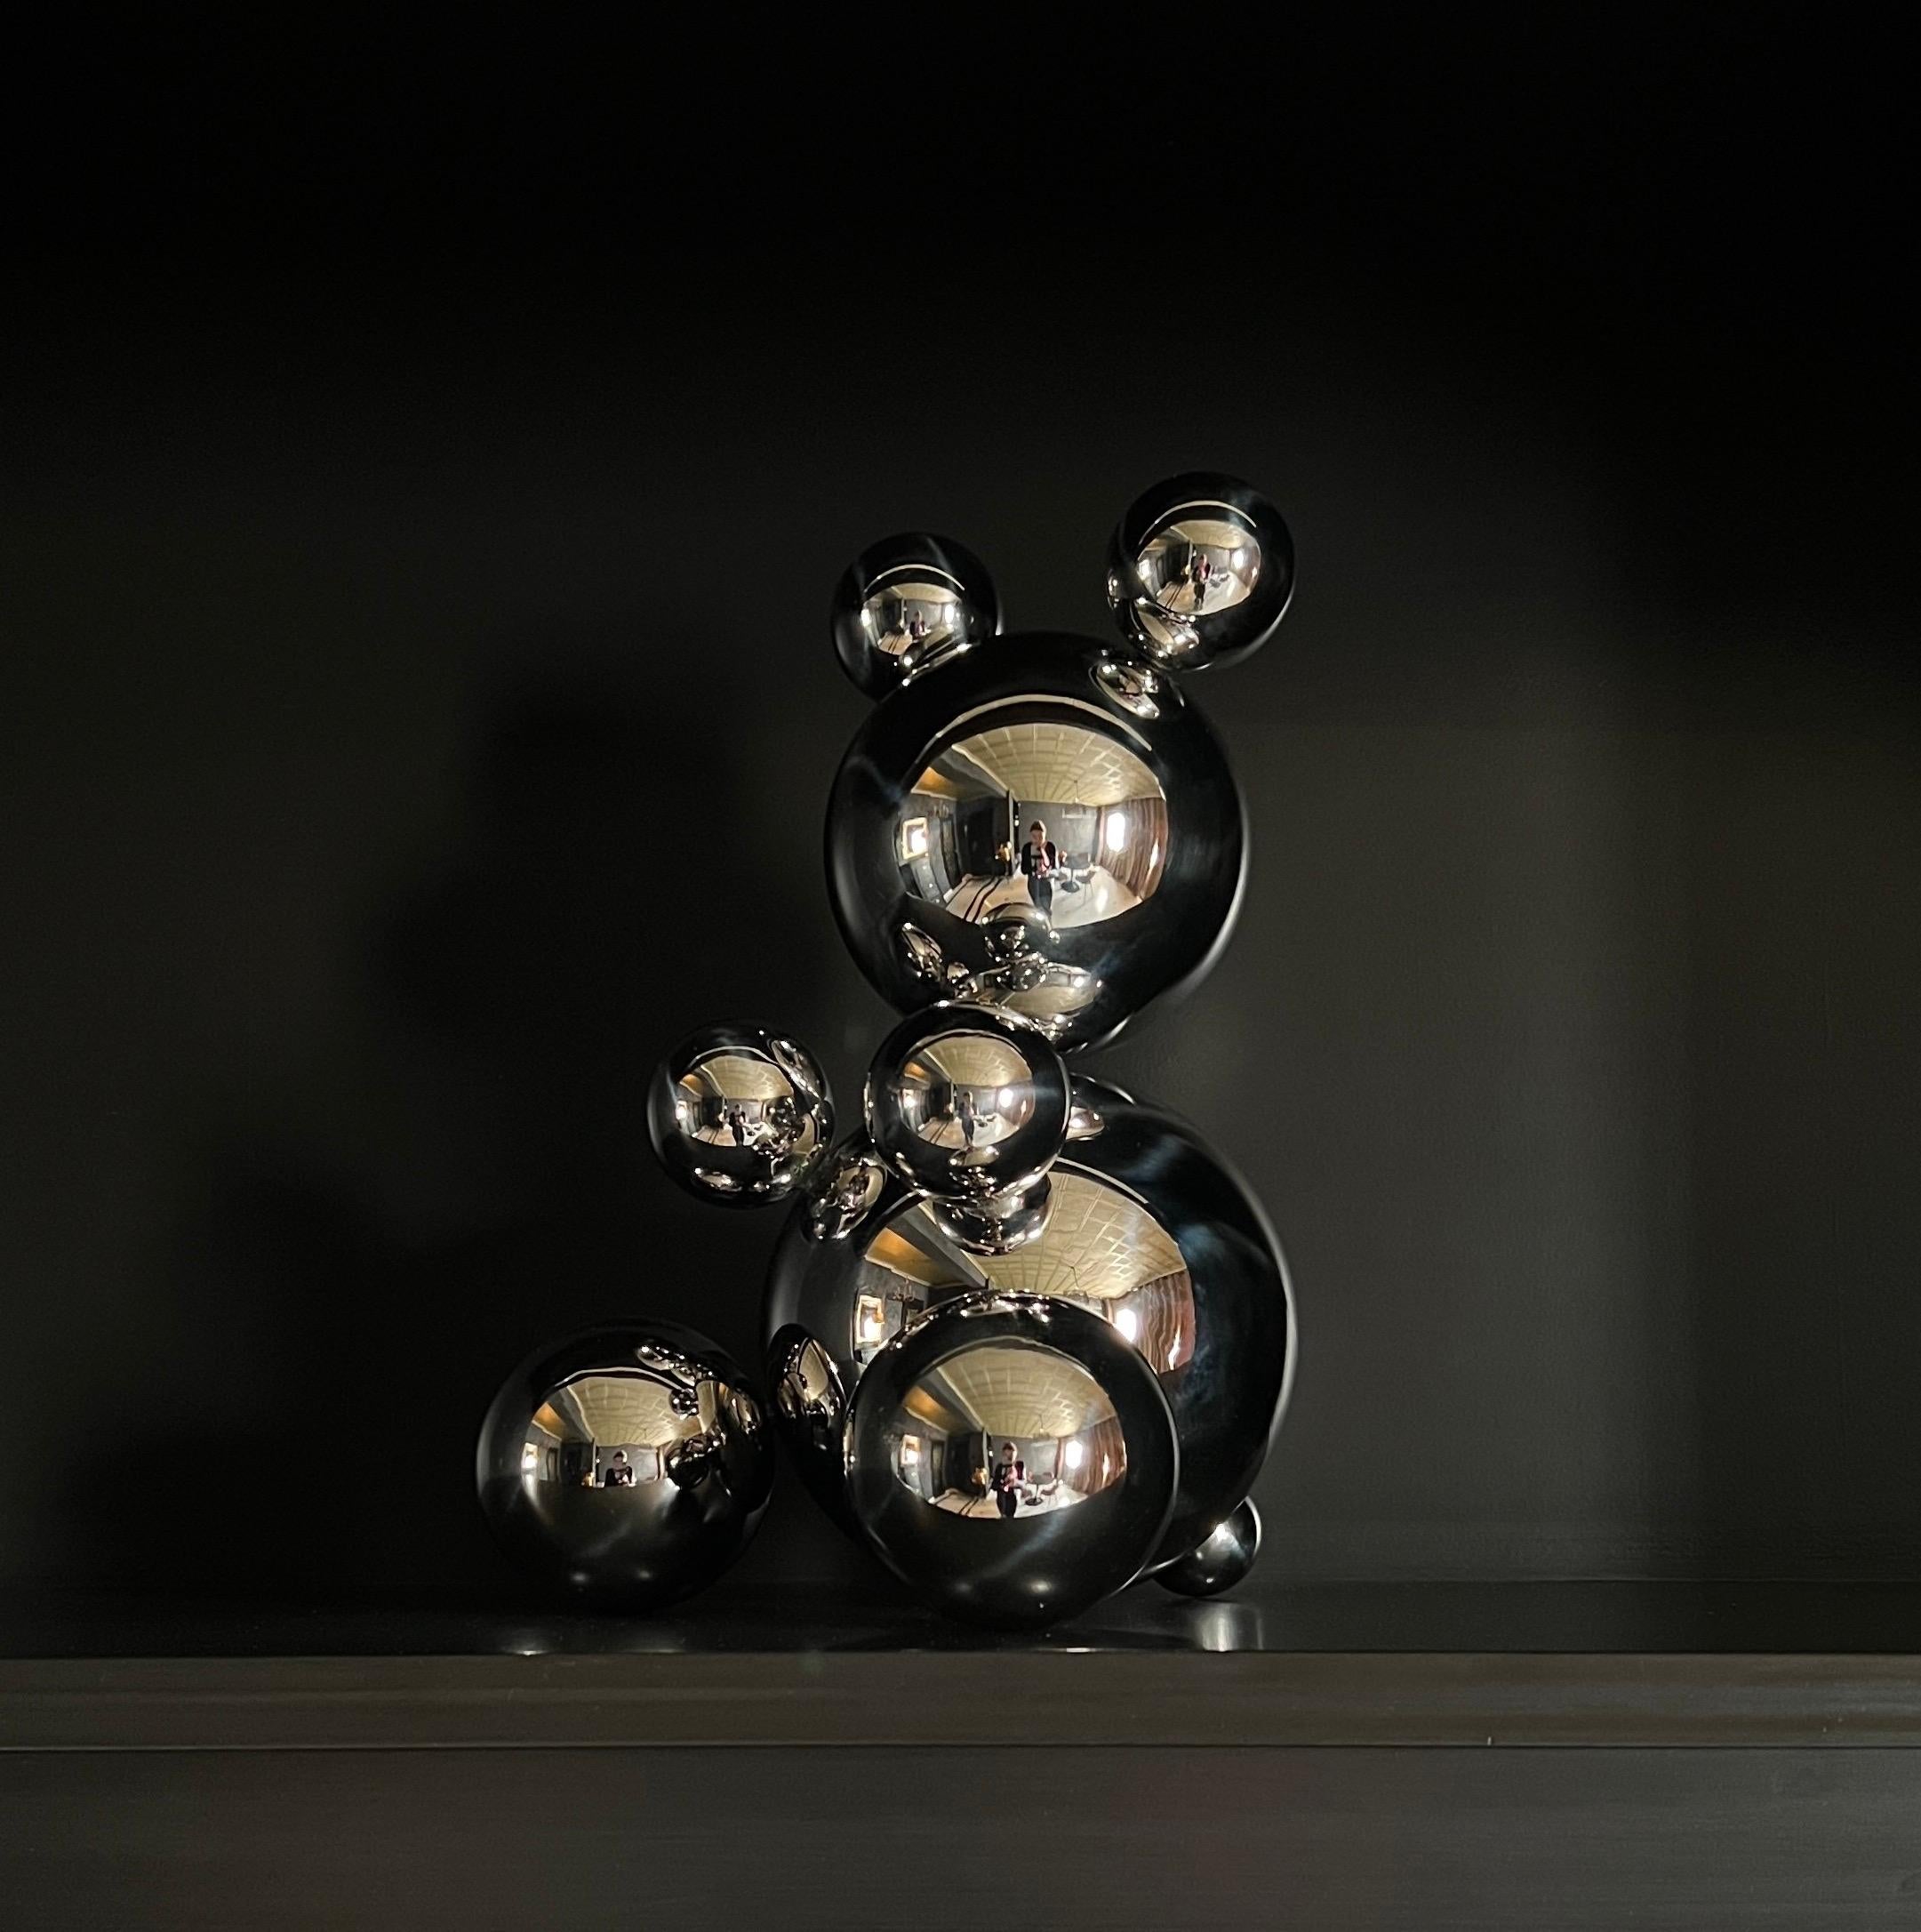 Middle Stainless Steel Bear 'Albert' Sculpture Minimalistic Animal 2